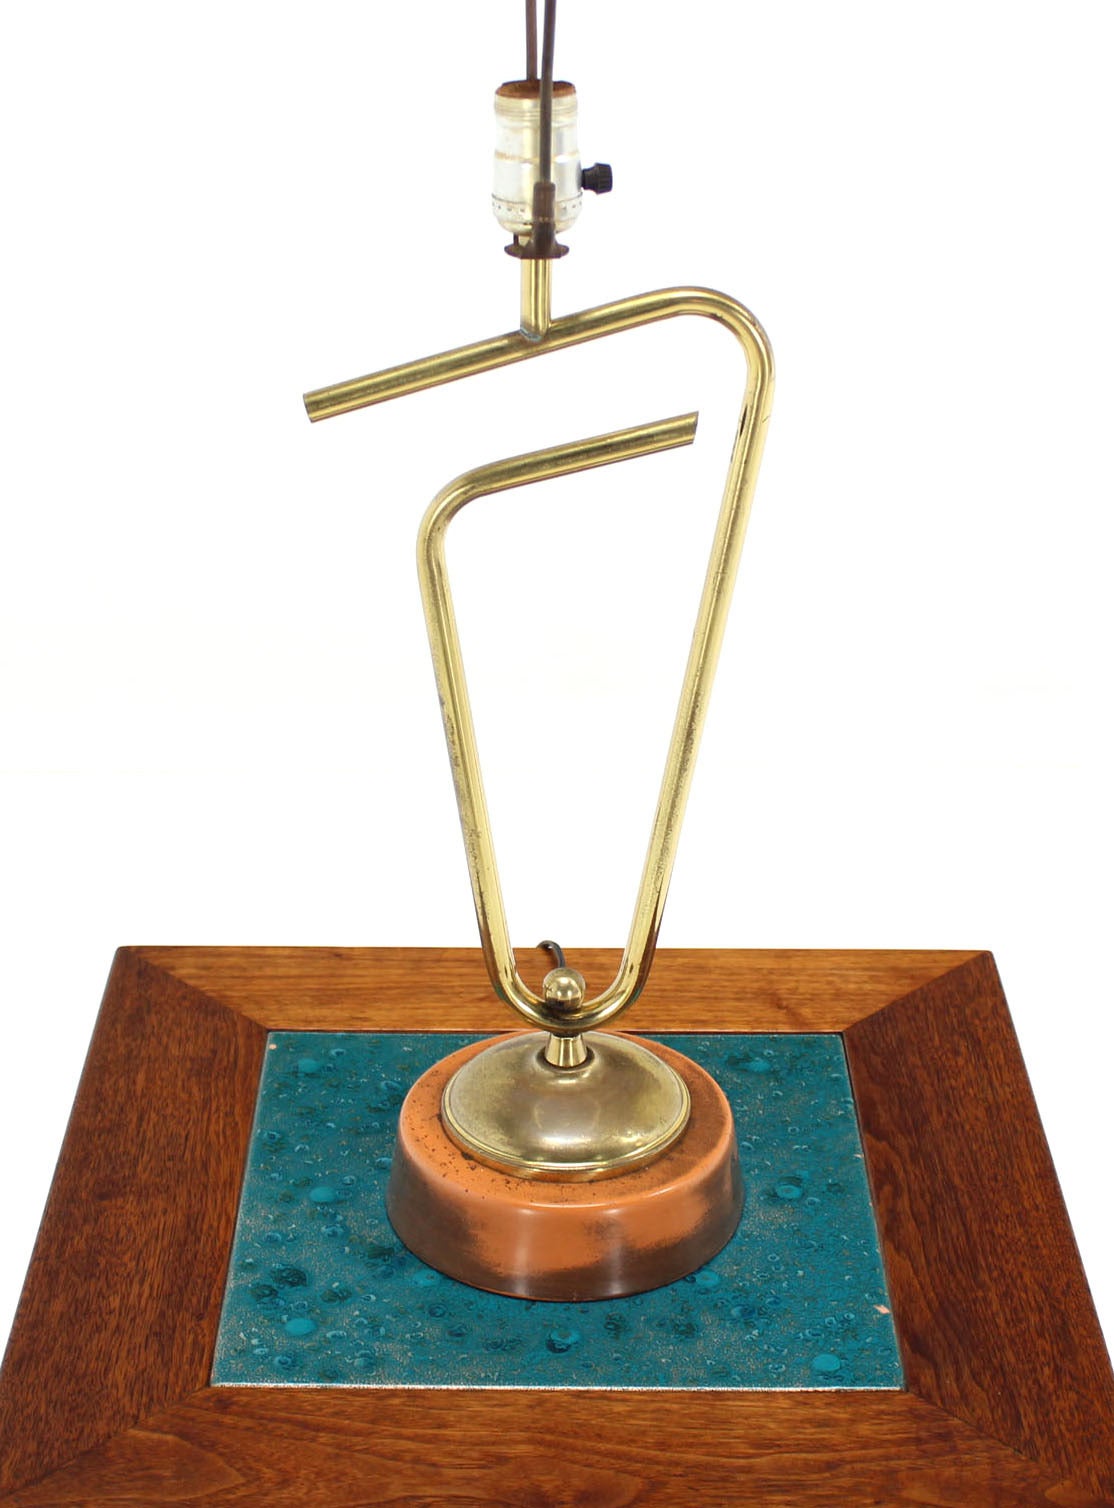 American Sculptural Brass Table Lamp Fontana Arte era.